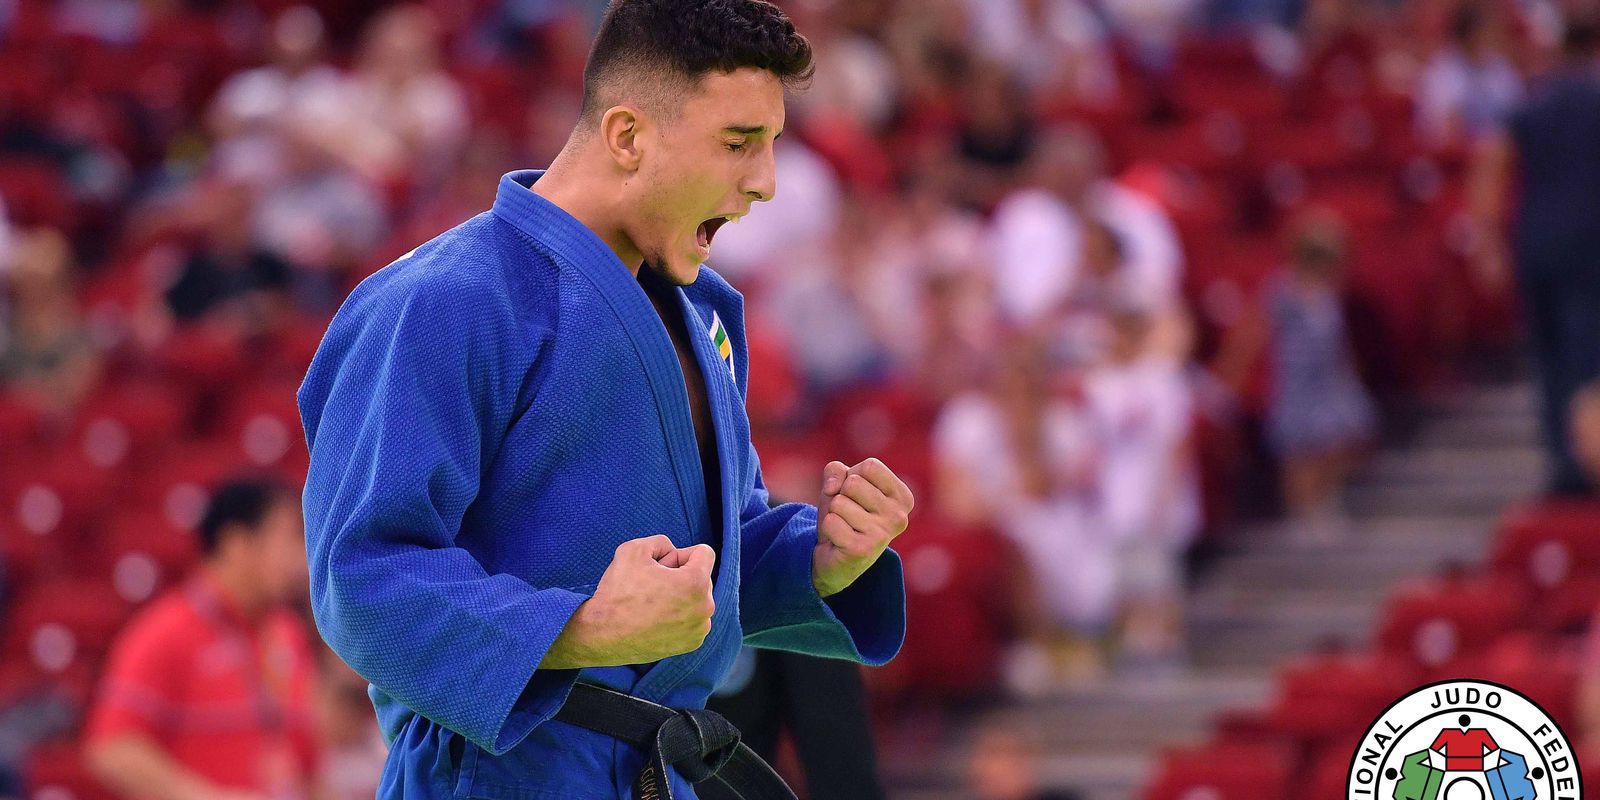 Judo: Guilherme Schmidt wins gold at the Budapest Grand Slam